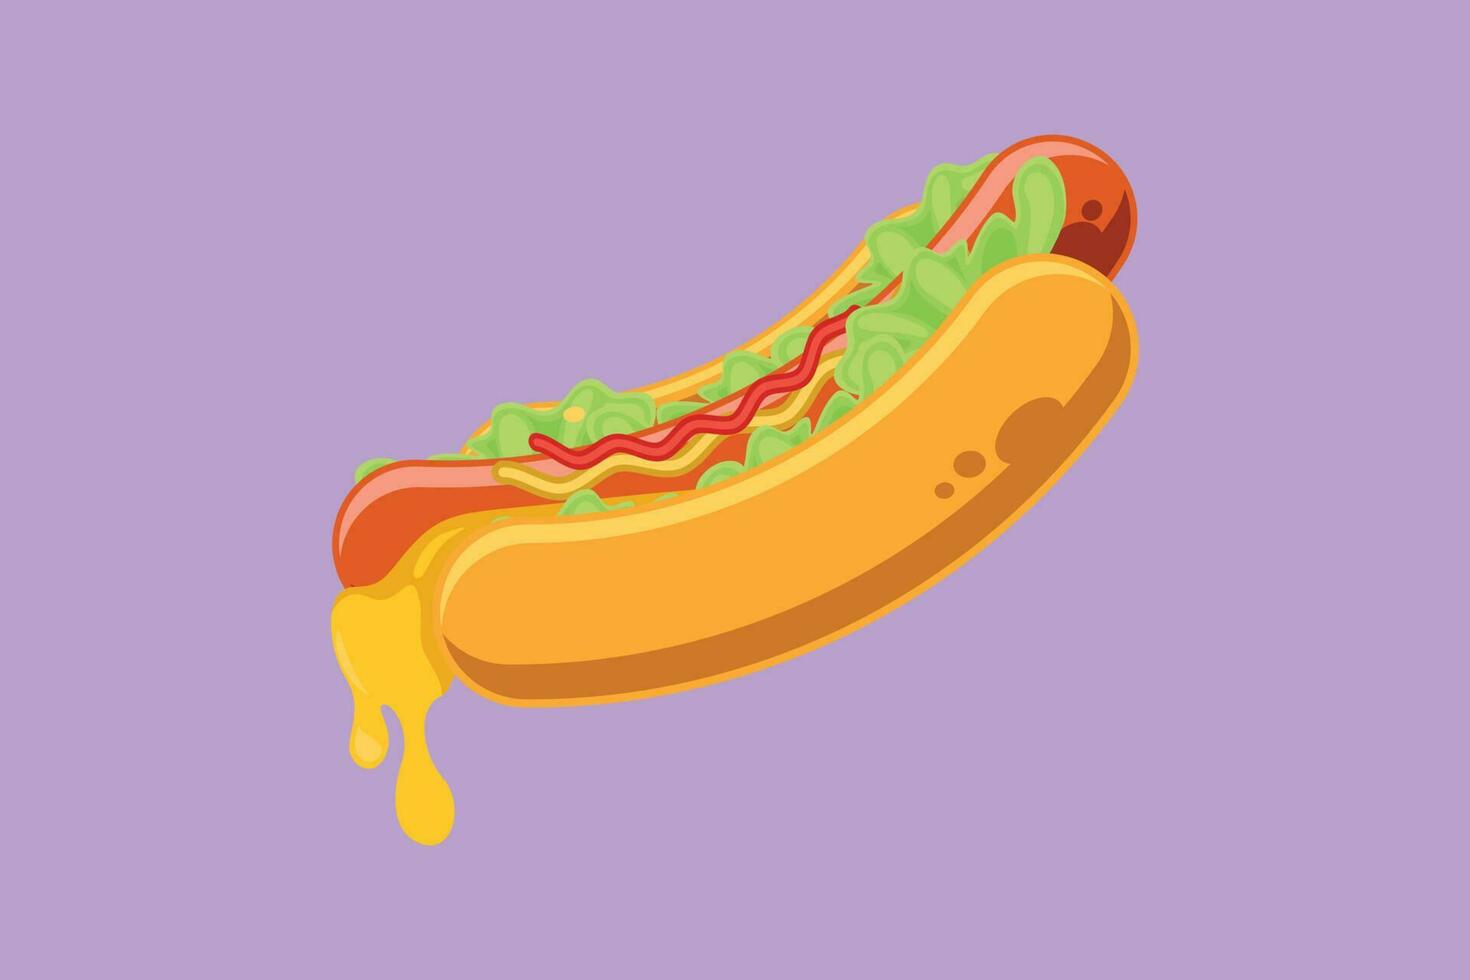 Character flat drawing fresh delicious American hot dog restaurant logo emblem. Fast food hotdog logotype template concept for cafe, shop or food delivery service. Cartoon design vector illustration